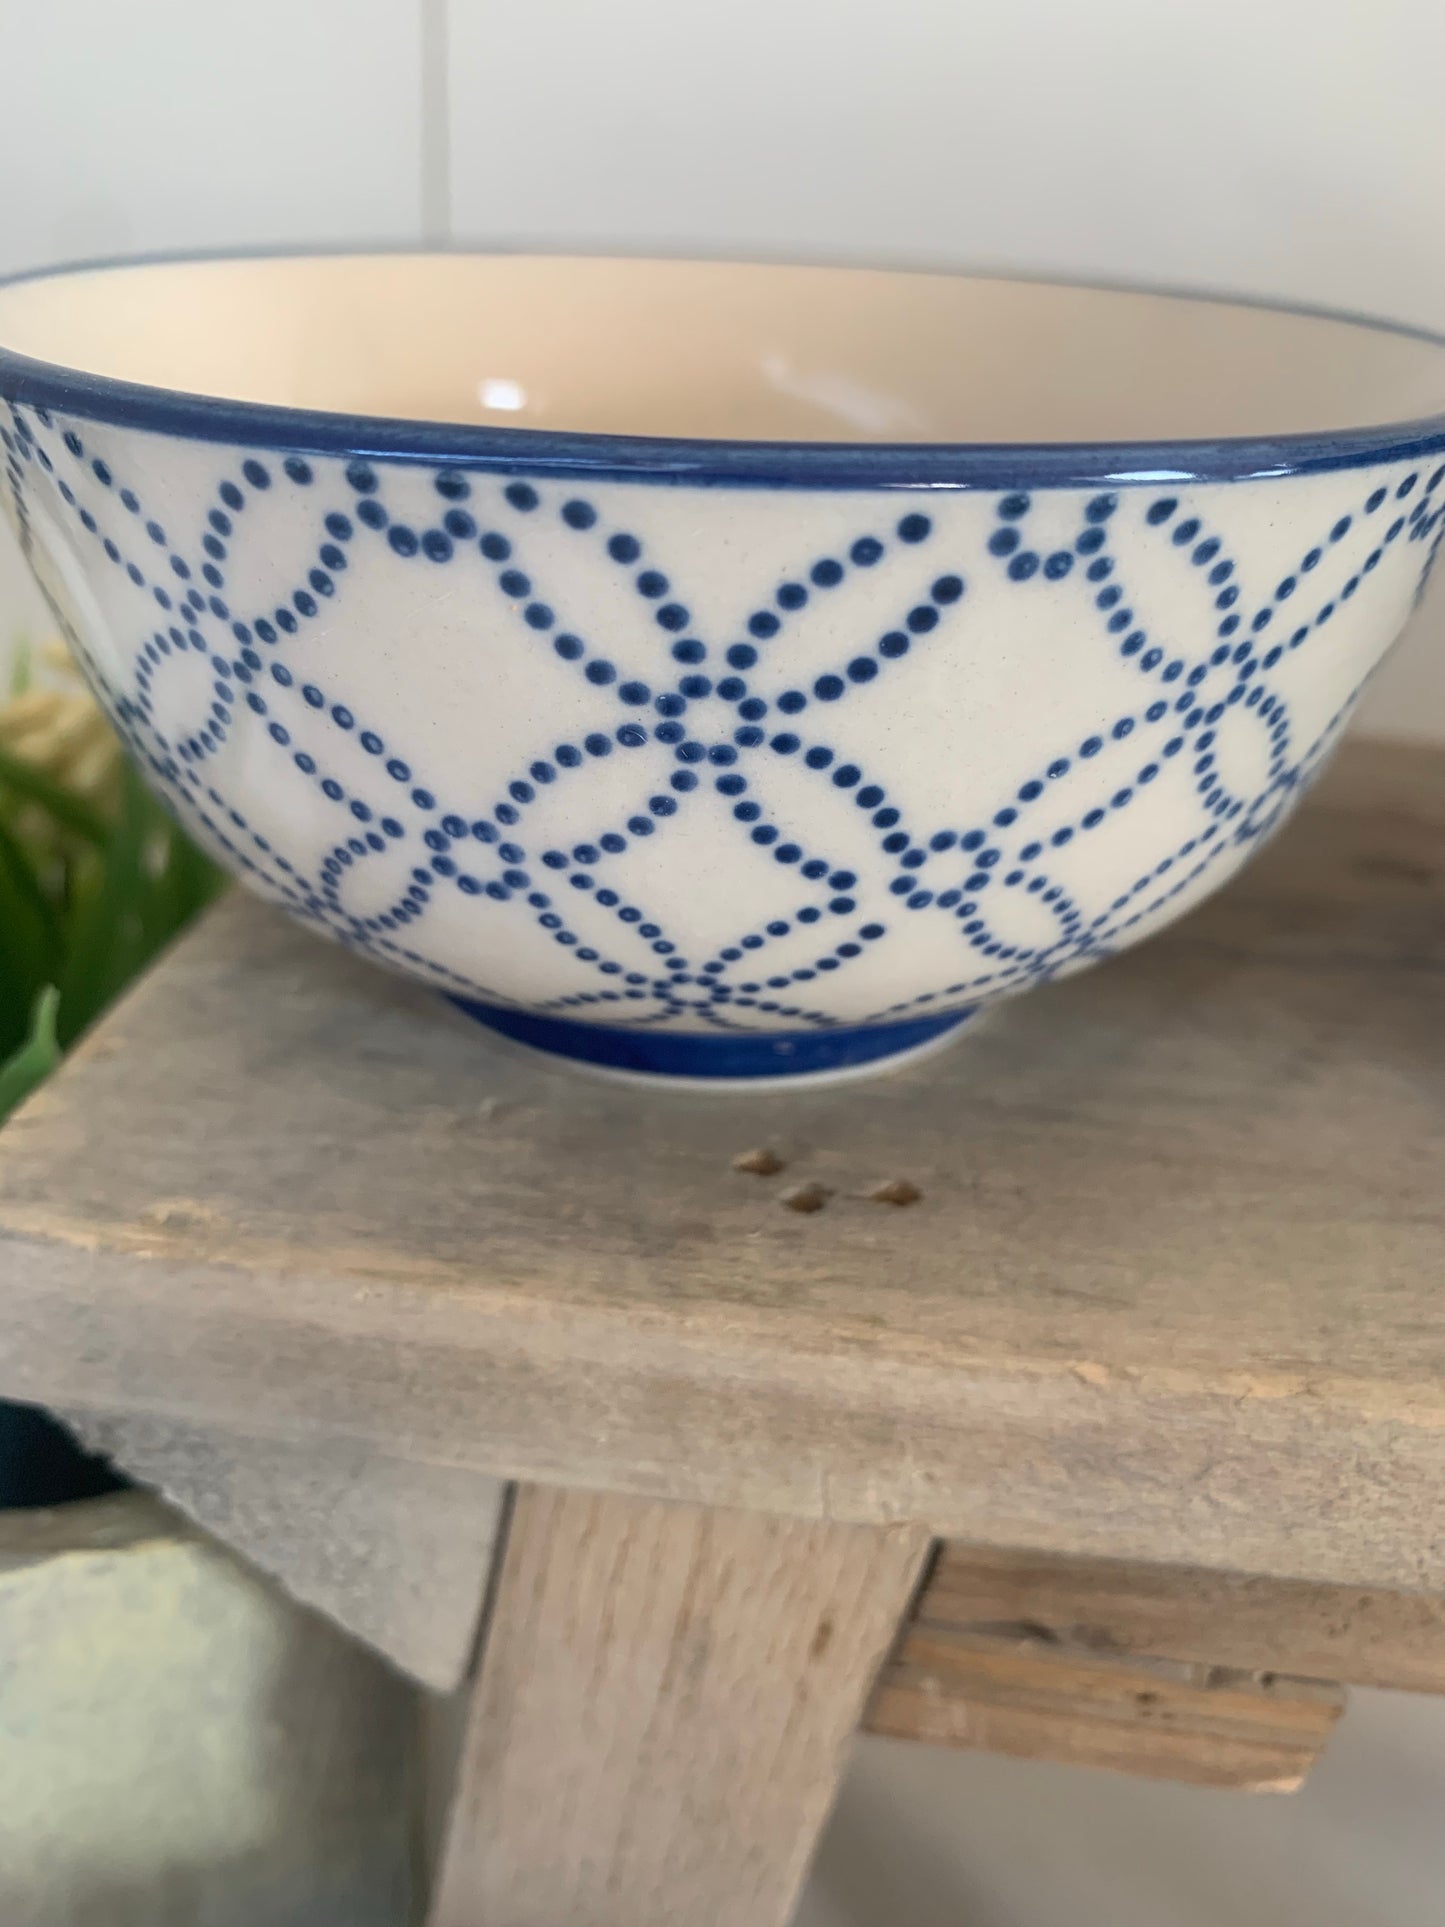 Sashiko Patterned Bowls - 4 designs available